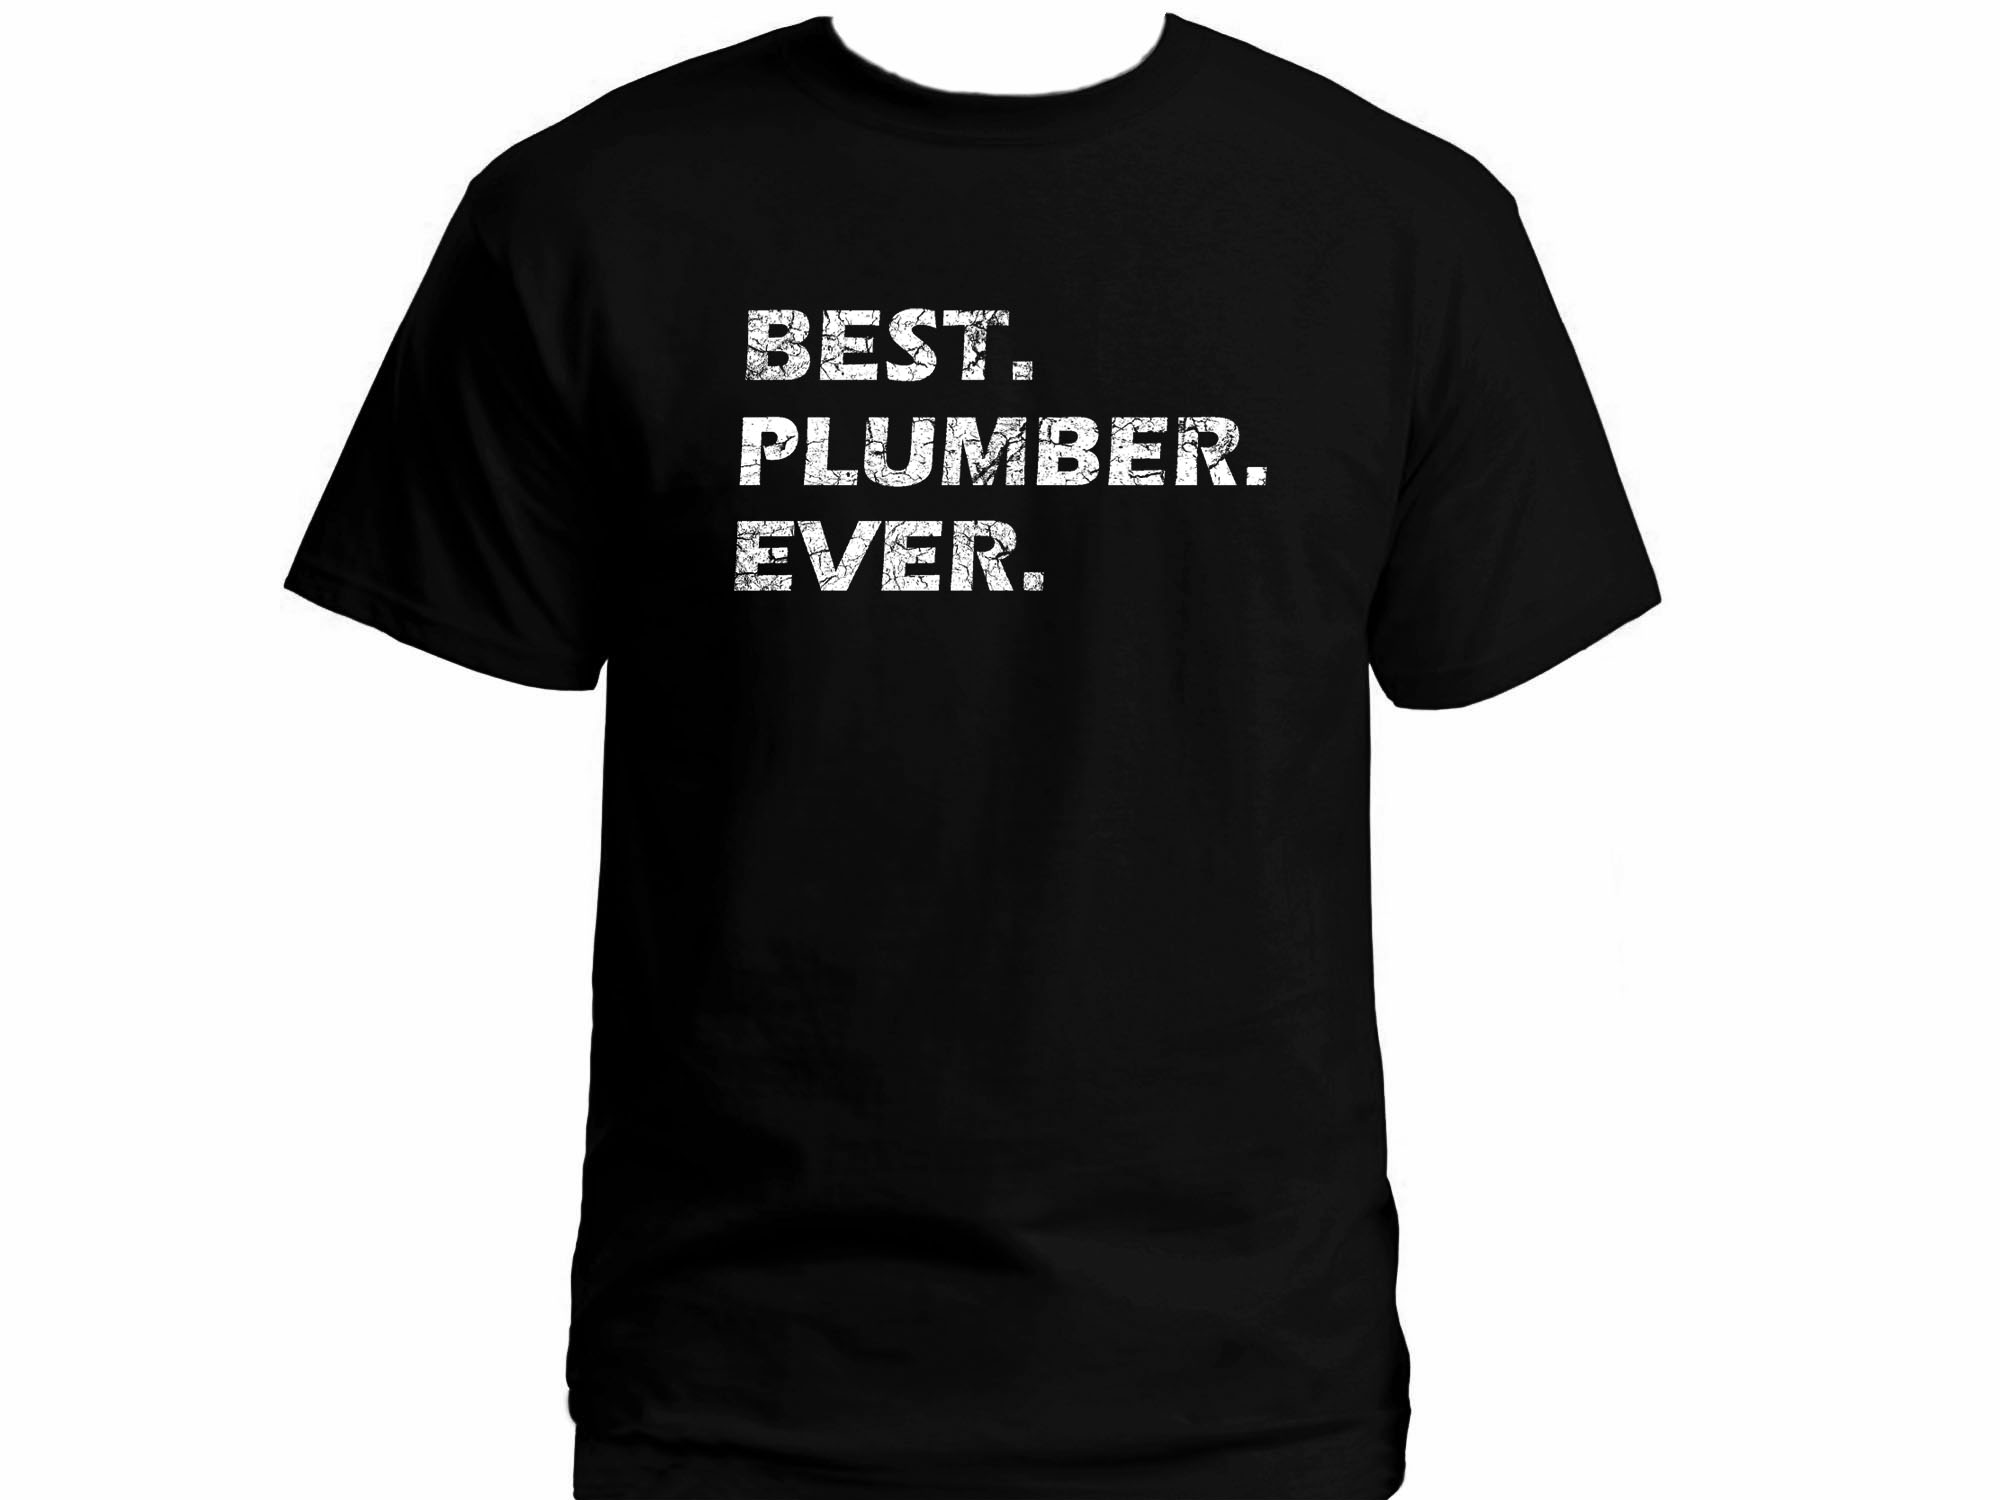 Best plumber ever distressed print t-shirt